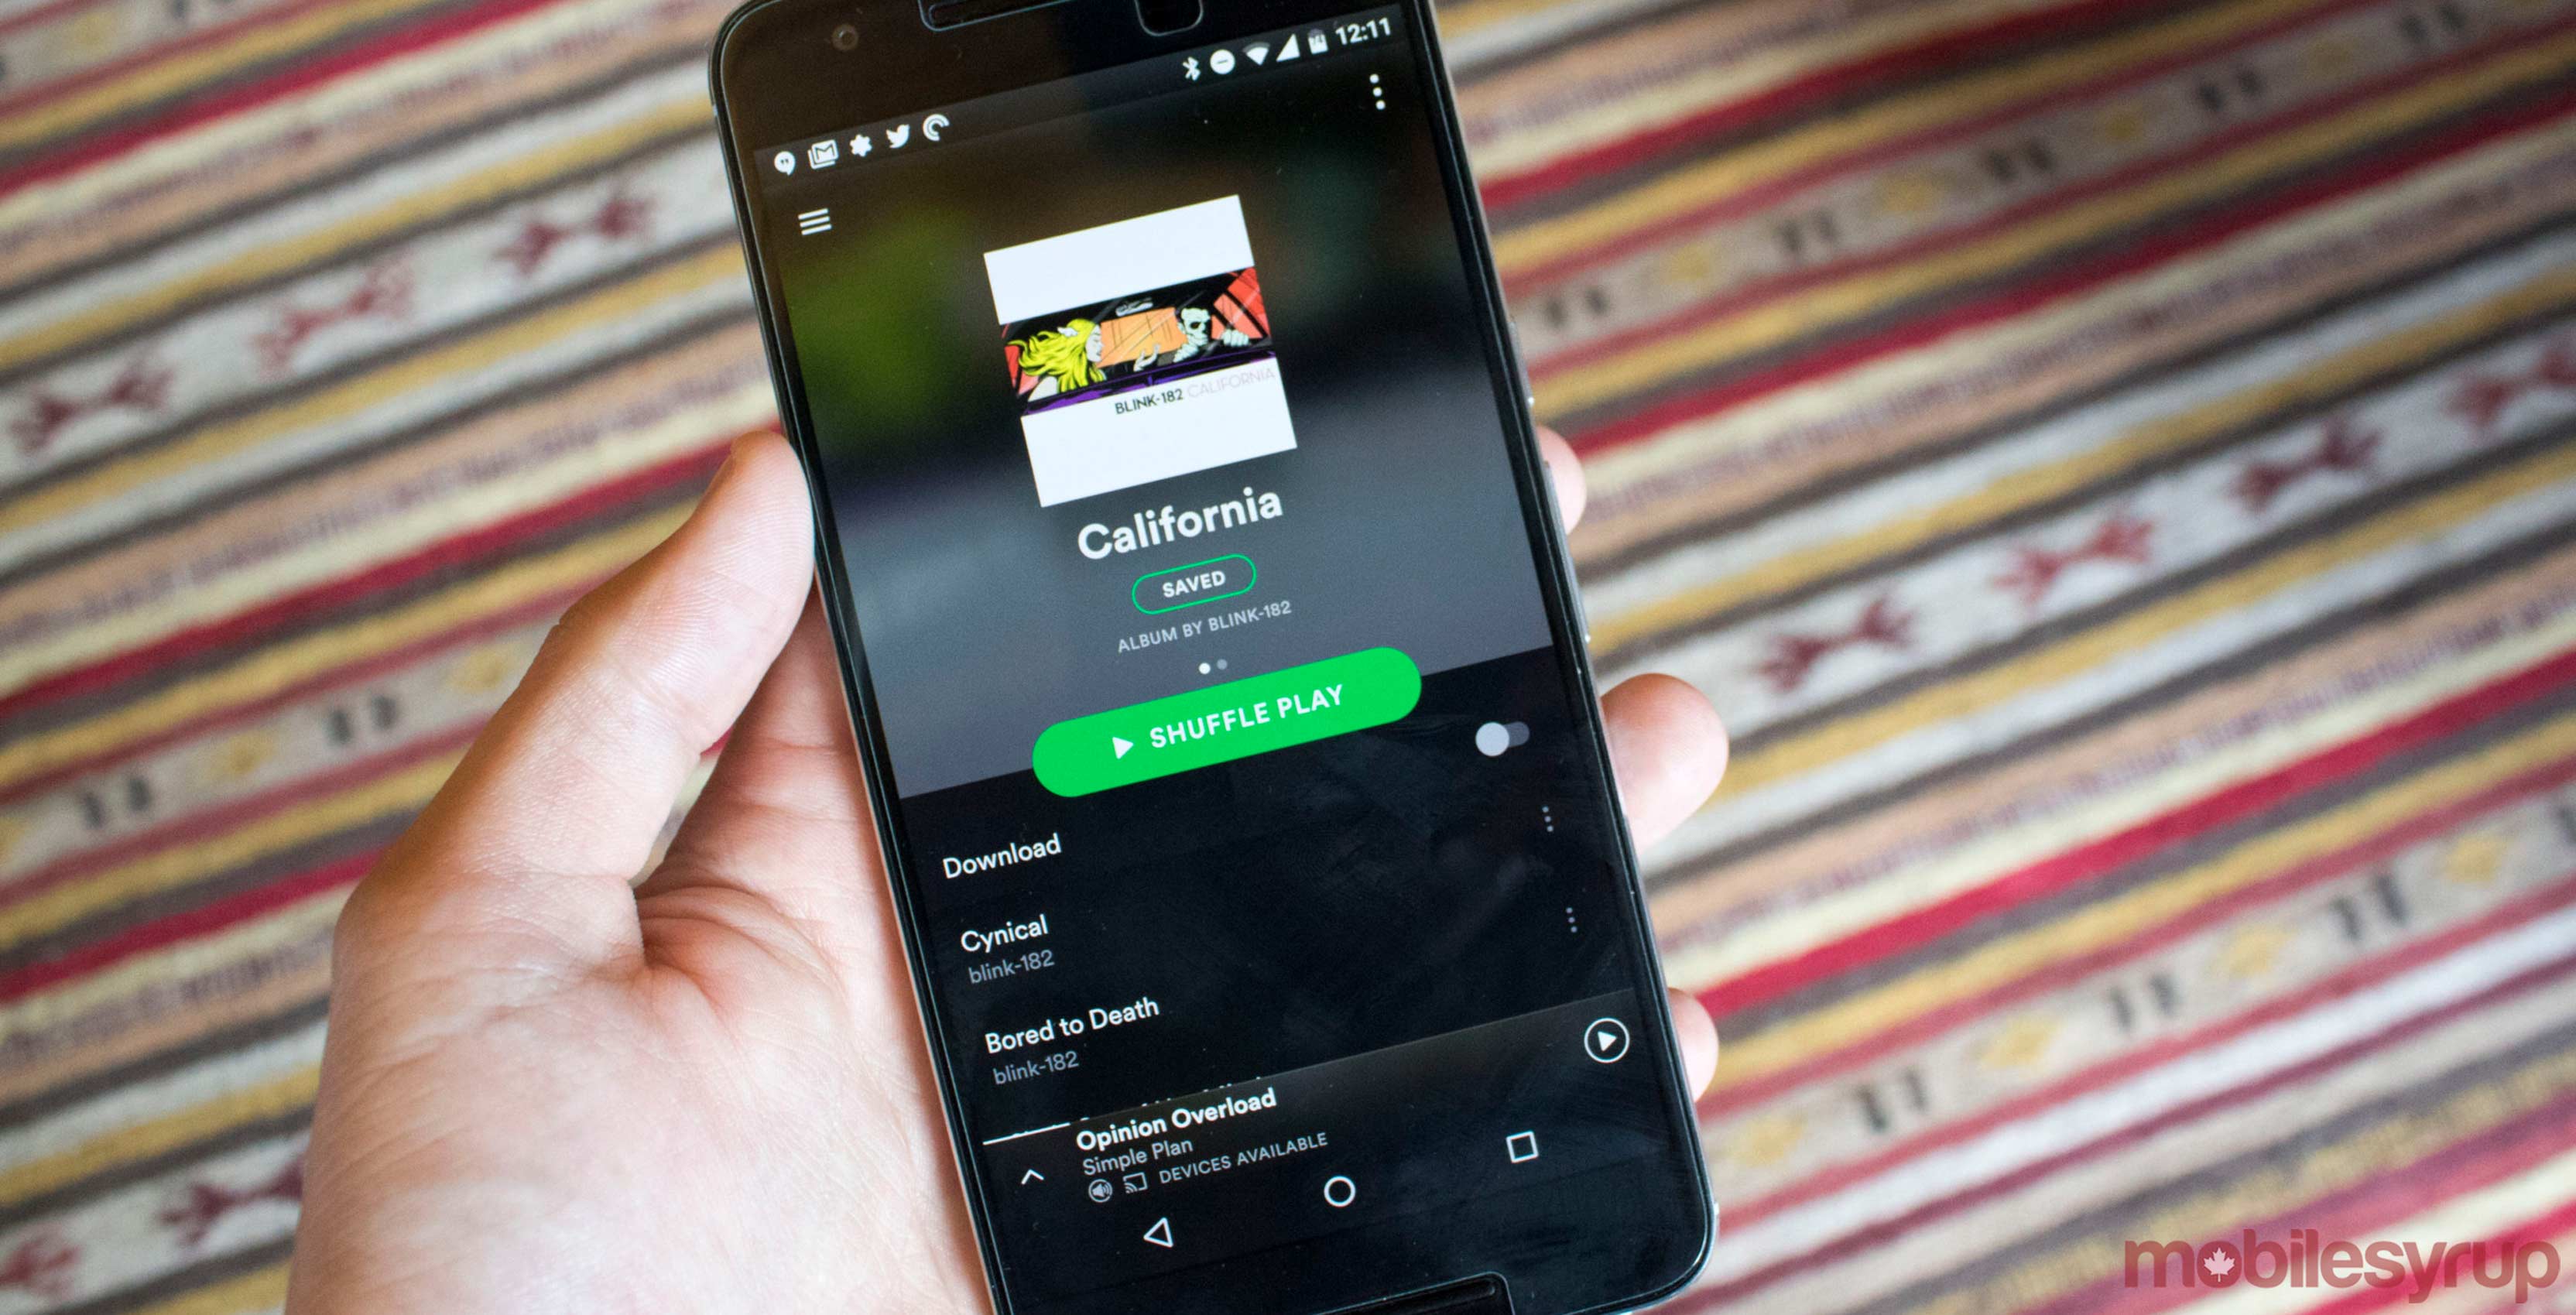 Music Streaming through Spotify